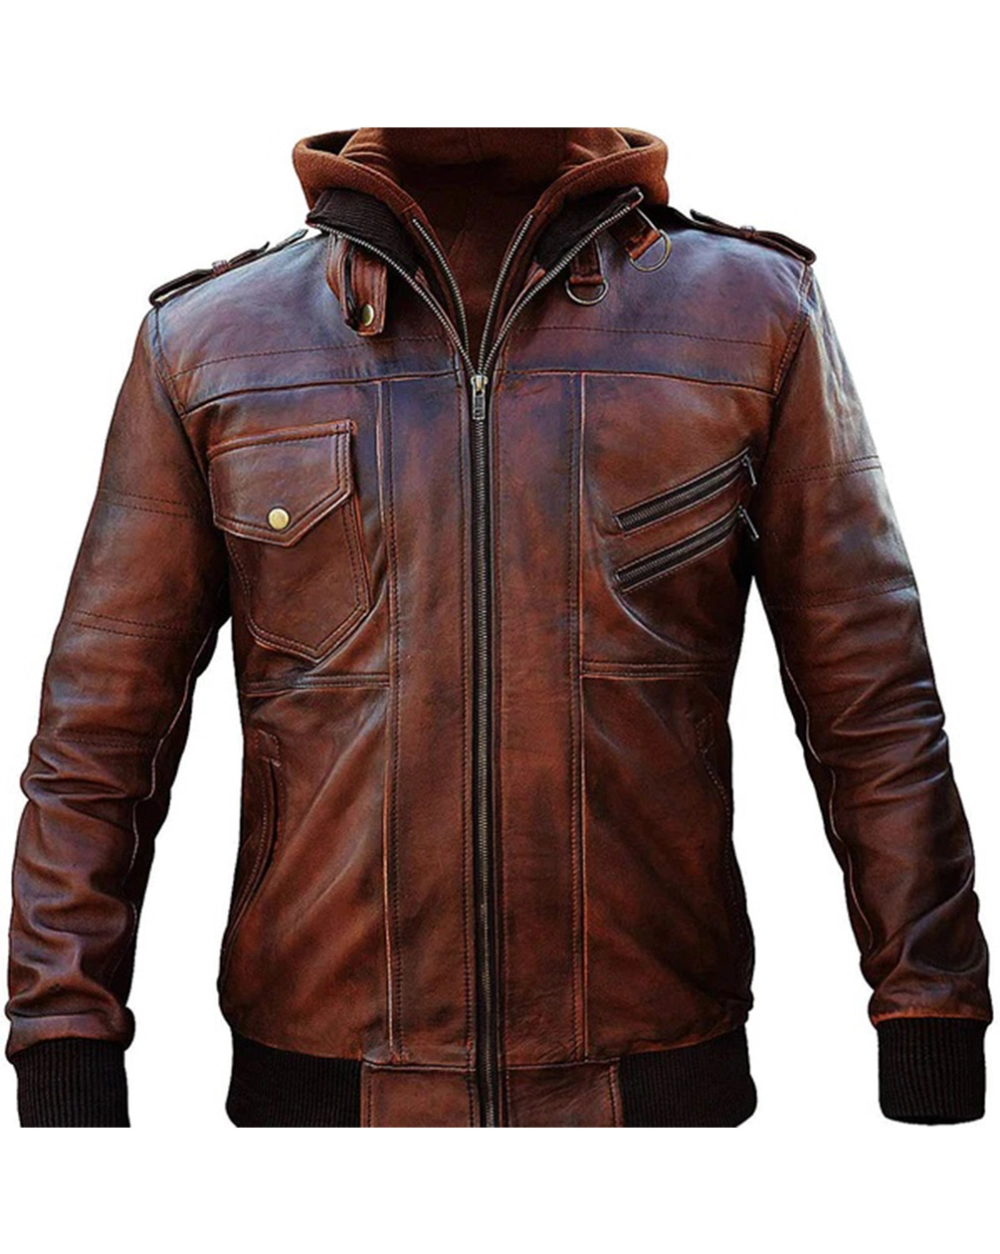 Buy Battlefield5 Bomber Leather Jacket